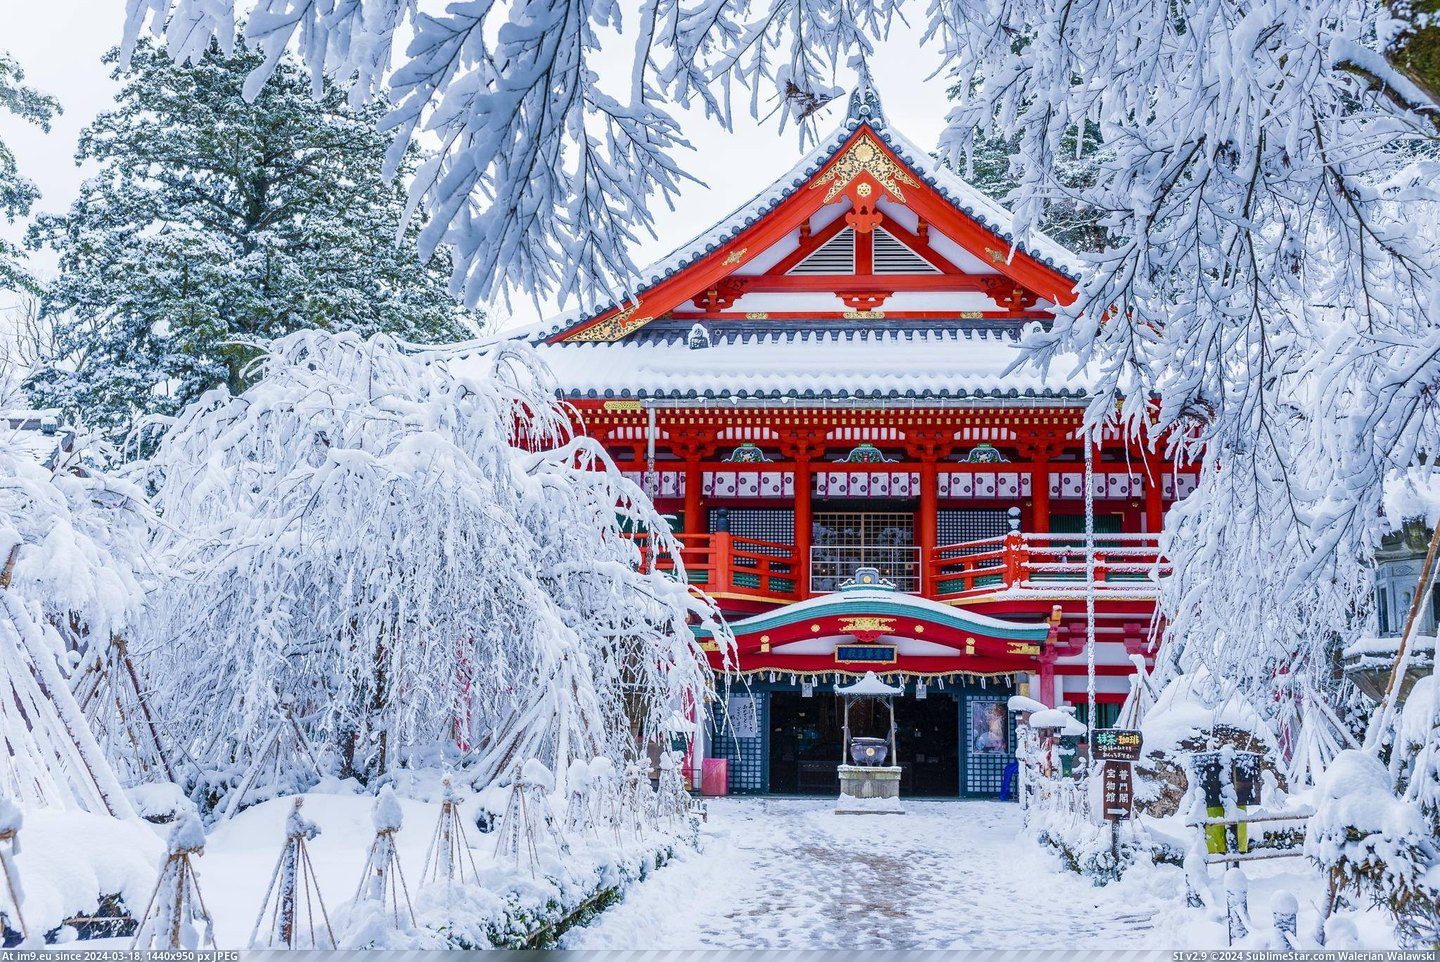 #Winter #Temple #Natadera #Japan [Pics] Natadera Temple in winter, Japan Pic. (Bild von album My r/PICS favs))